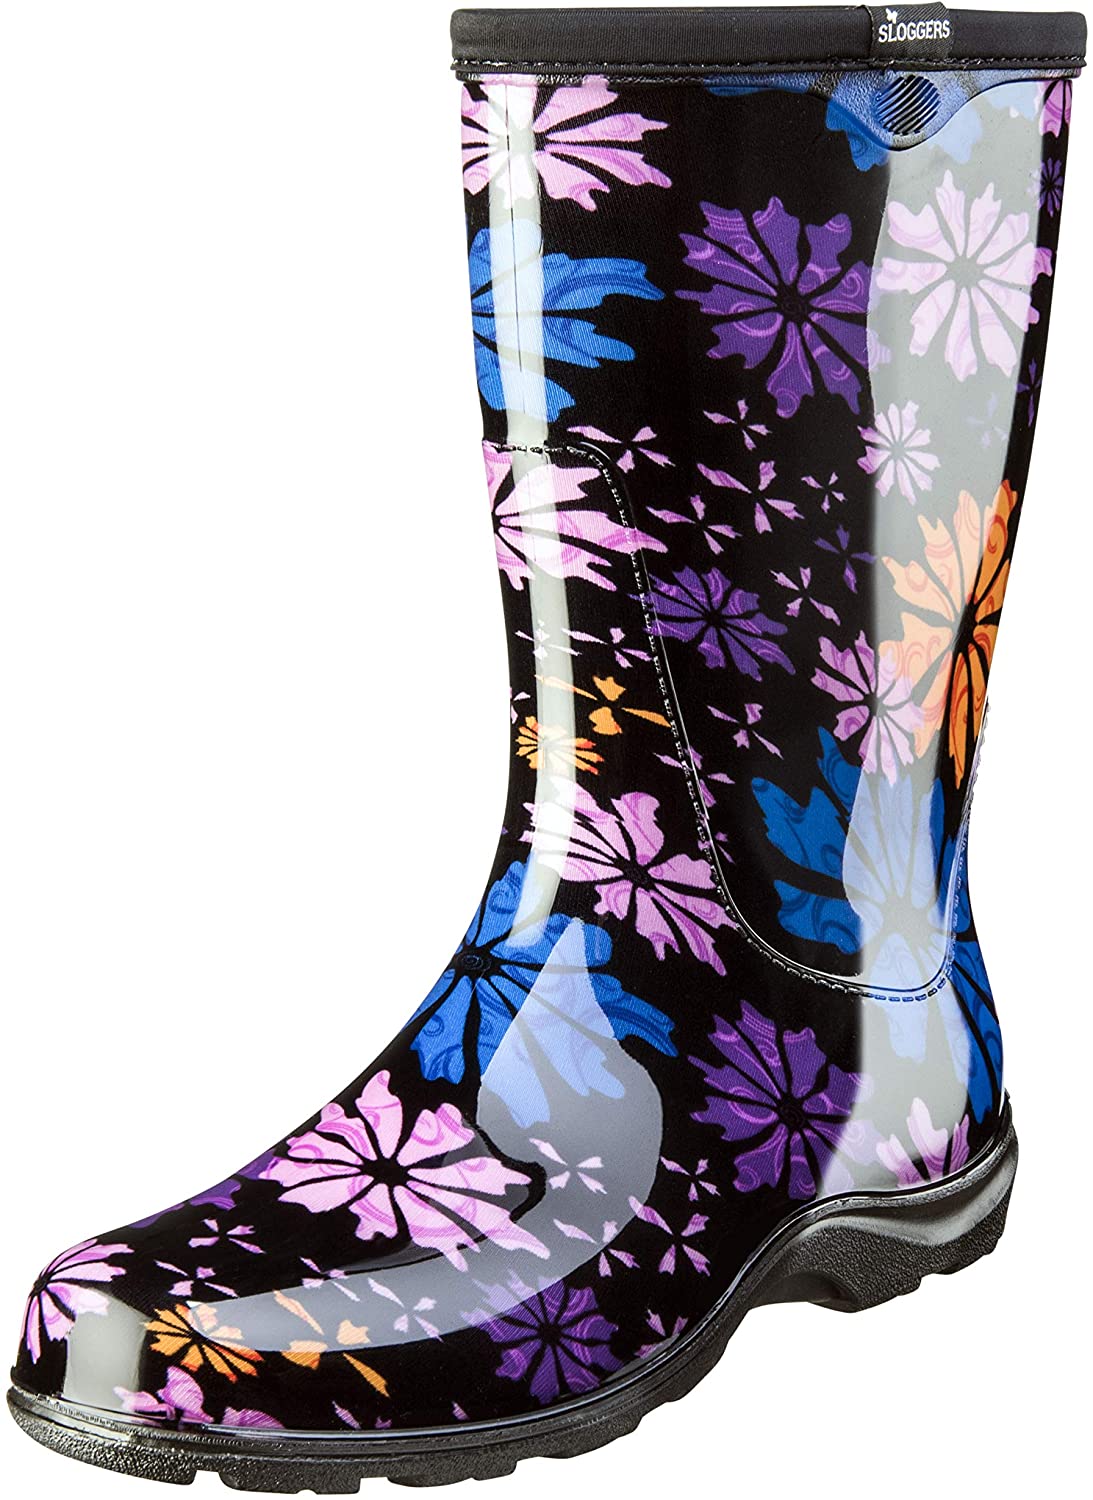 Sloggers Rain and Garden Boot, best rain boots for women